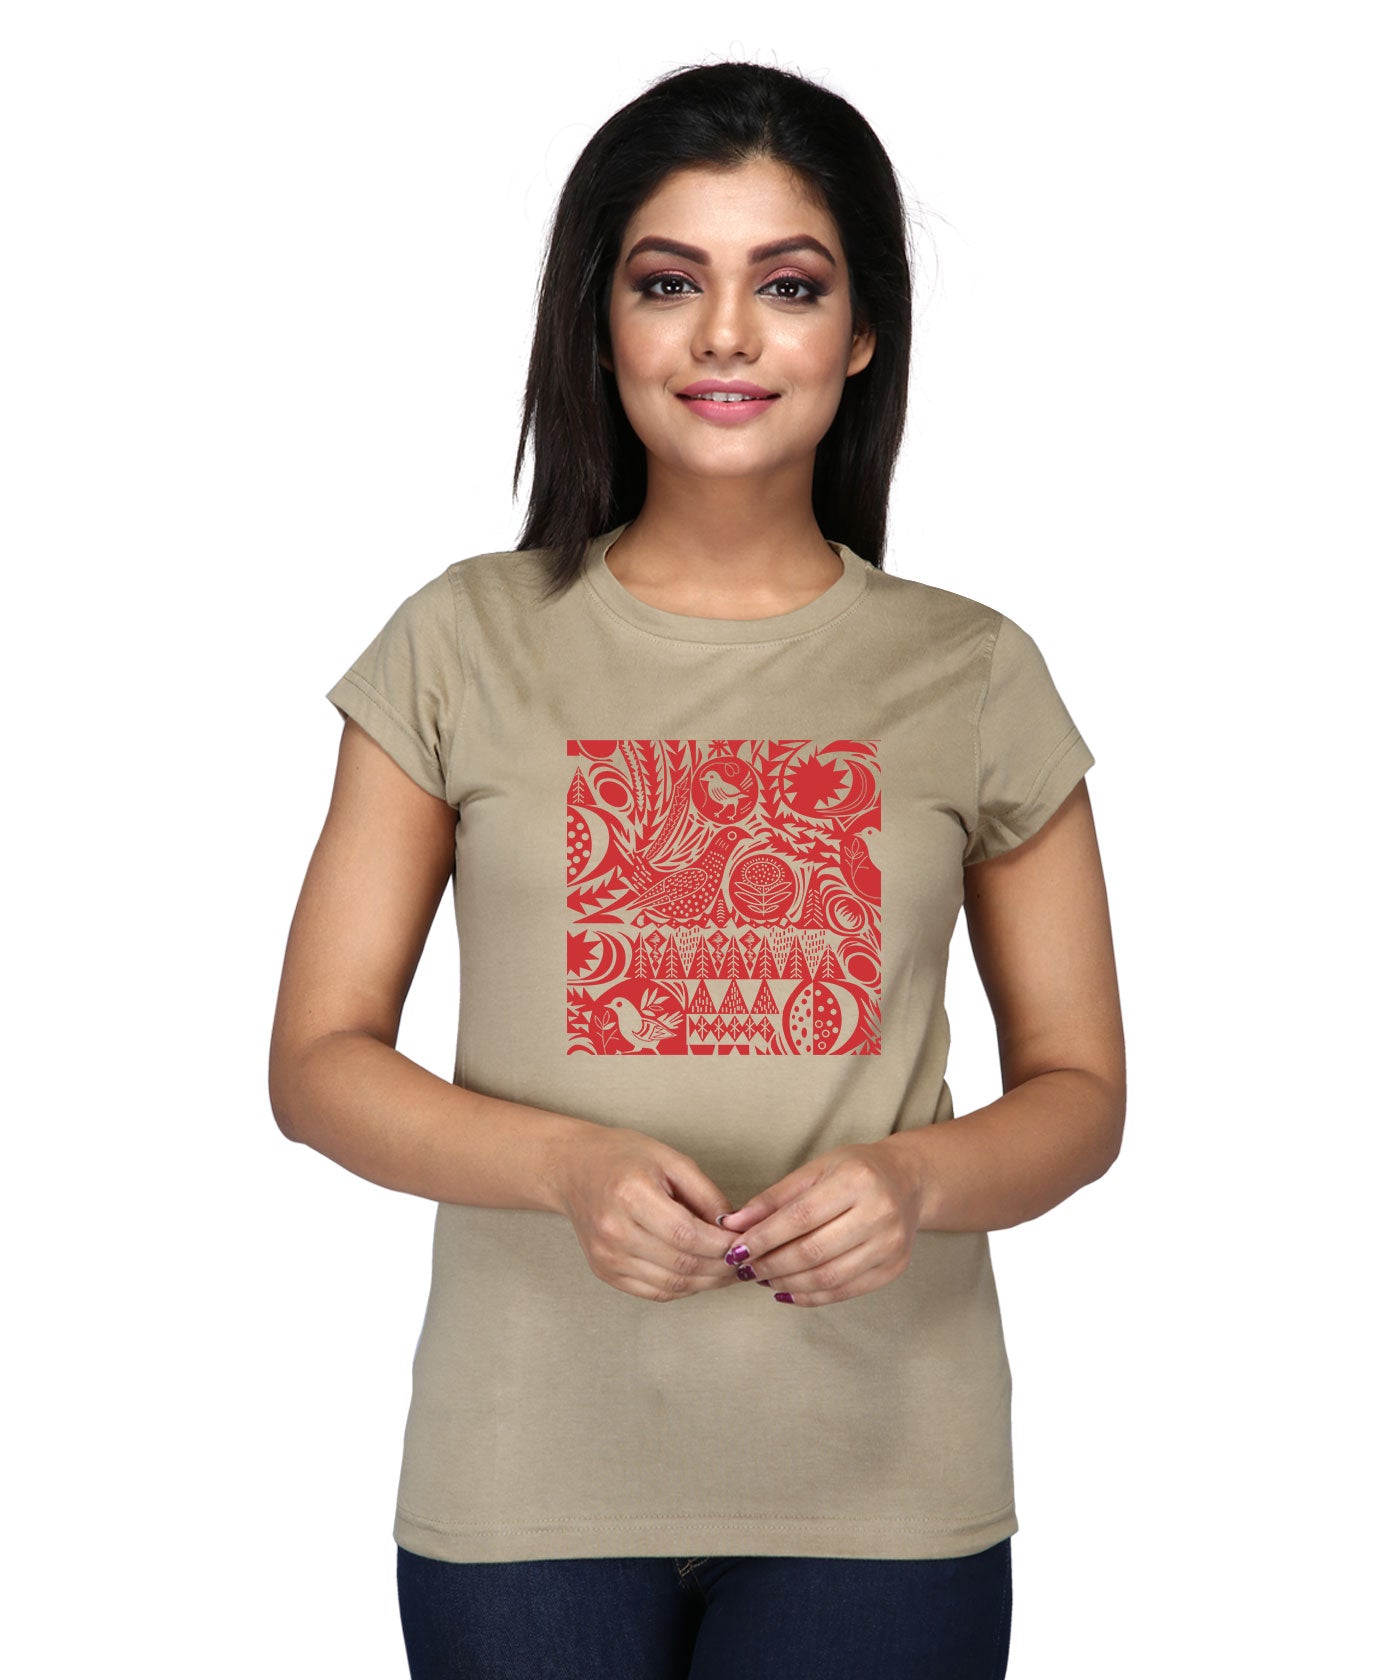 Birds And Flowers - Block Print Tees for Women - Khaki